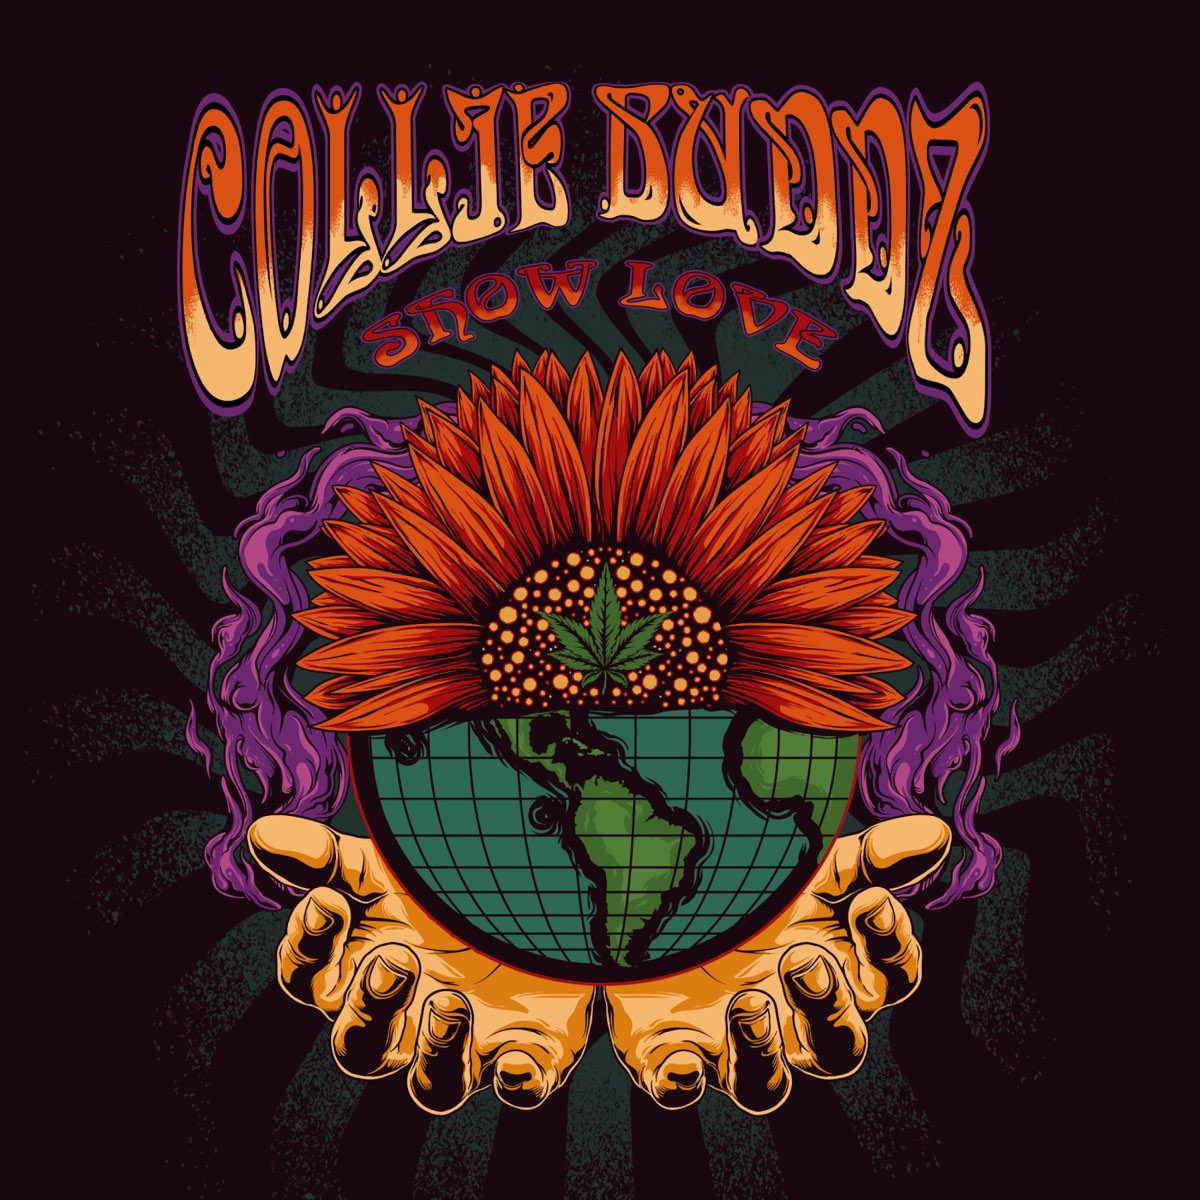 Show Love - Single - Album by Collie Buddz - Apple Music